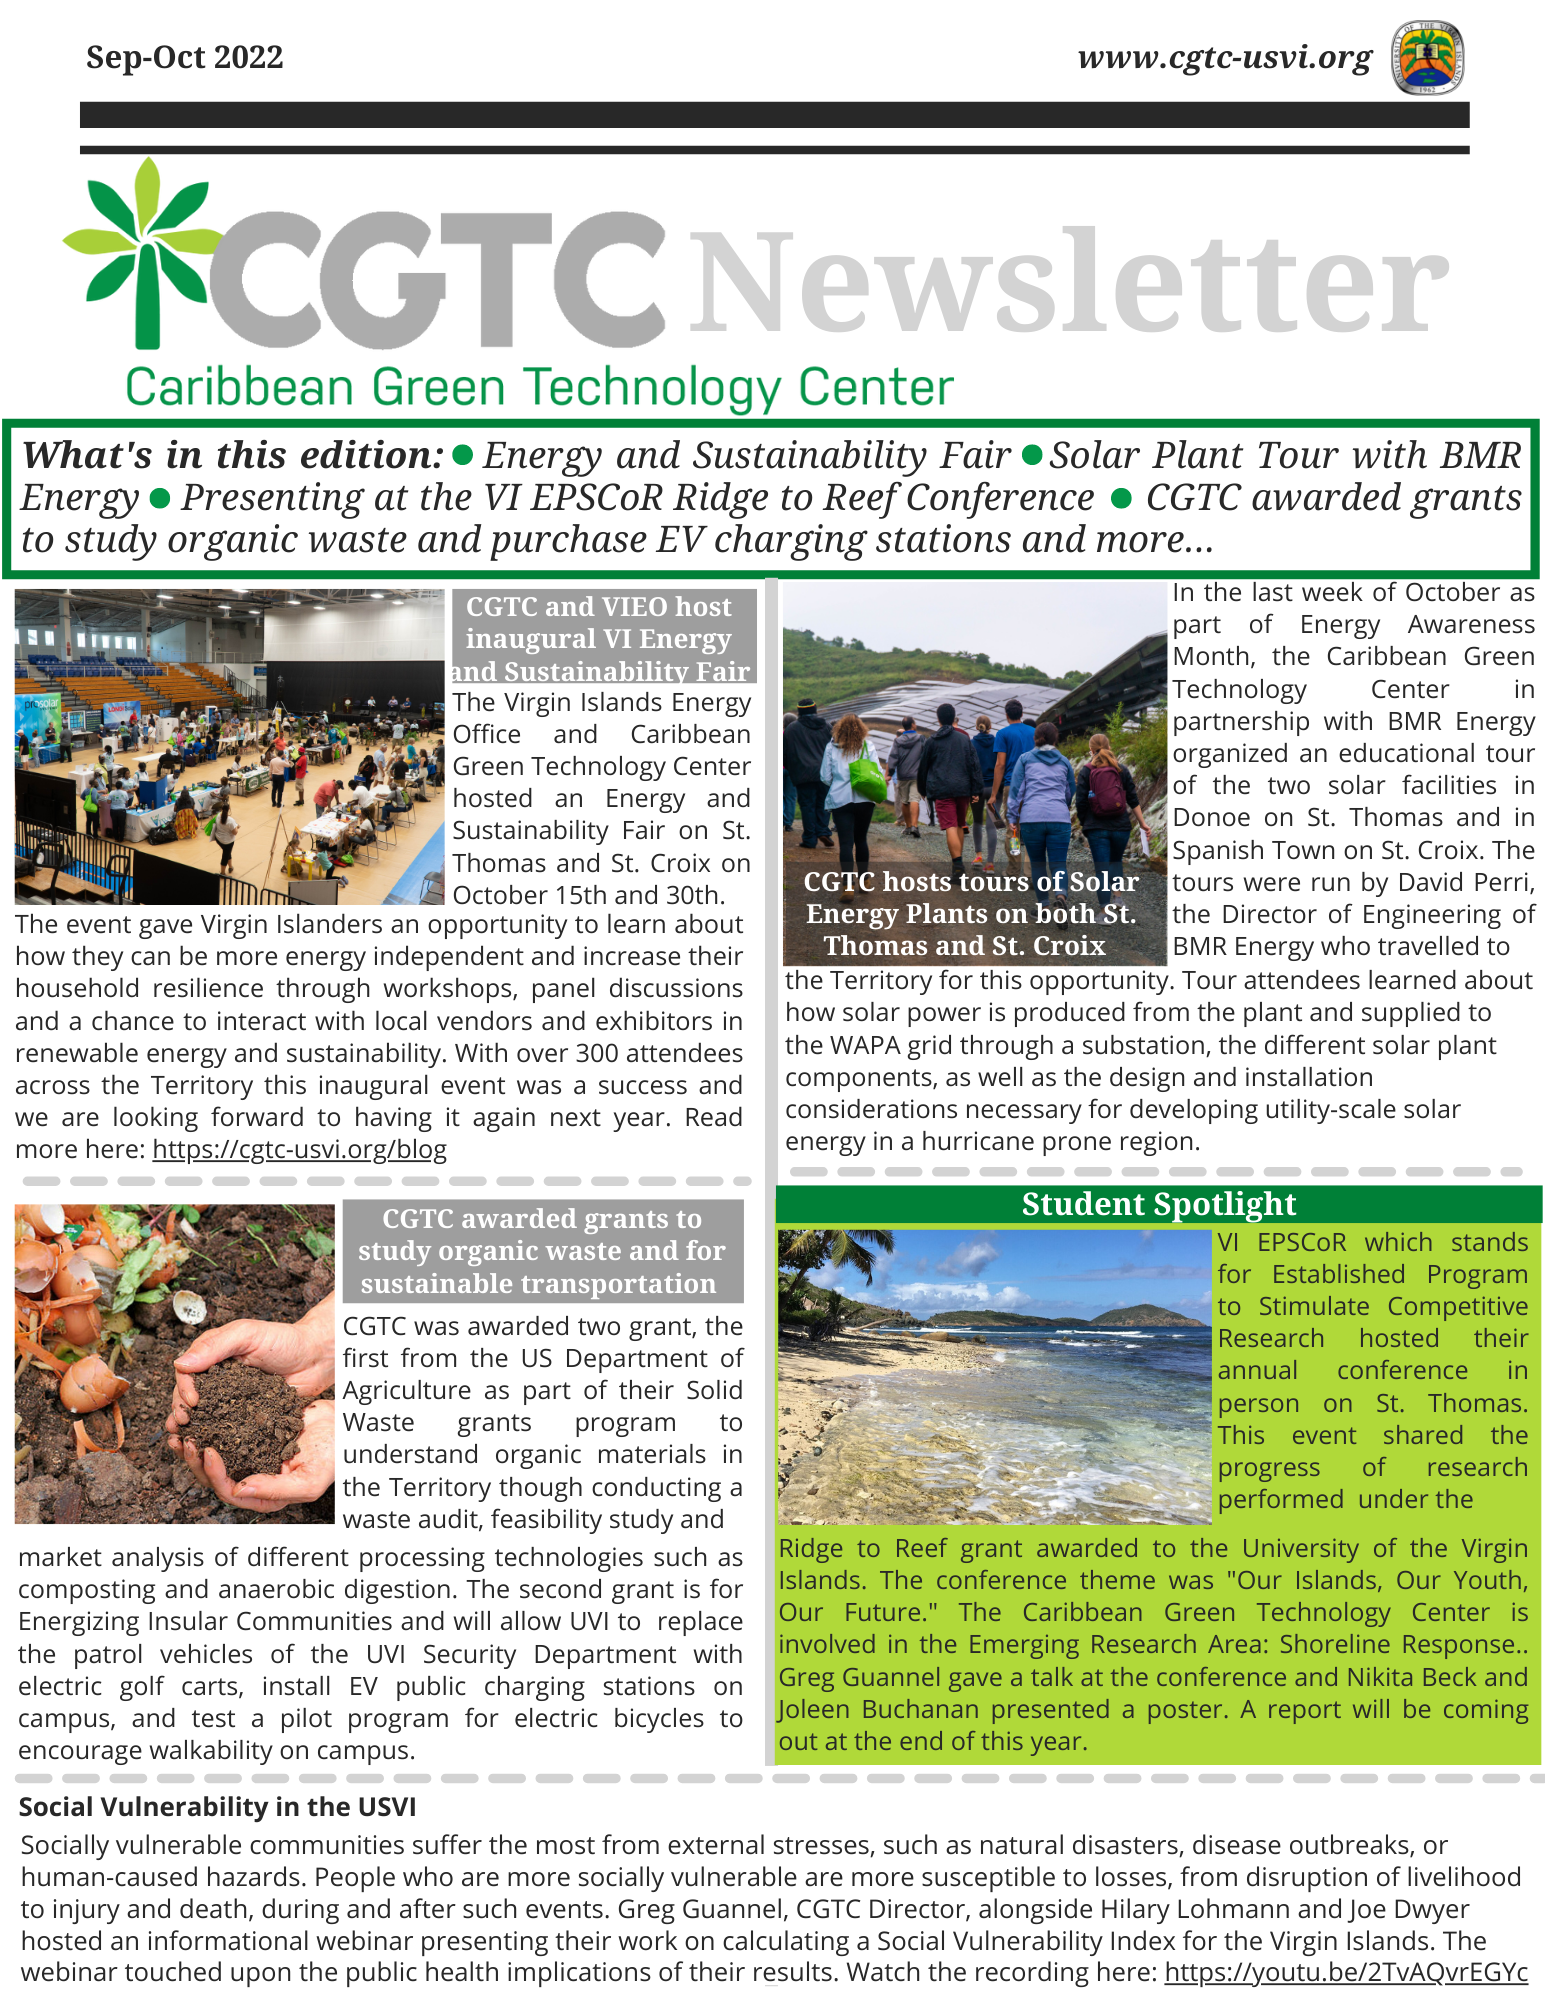 CGTC Newsletter Sep-Oct 2022